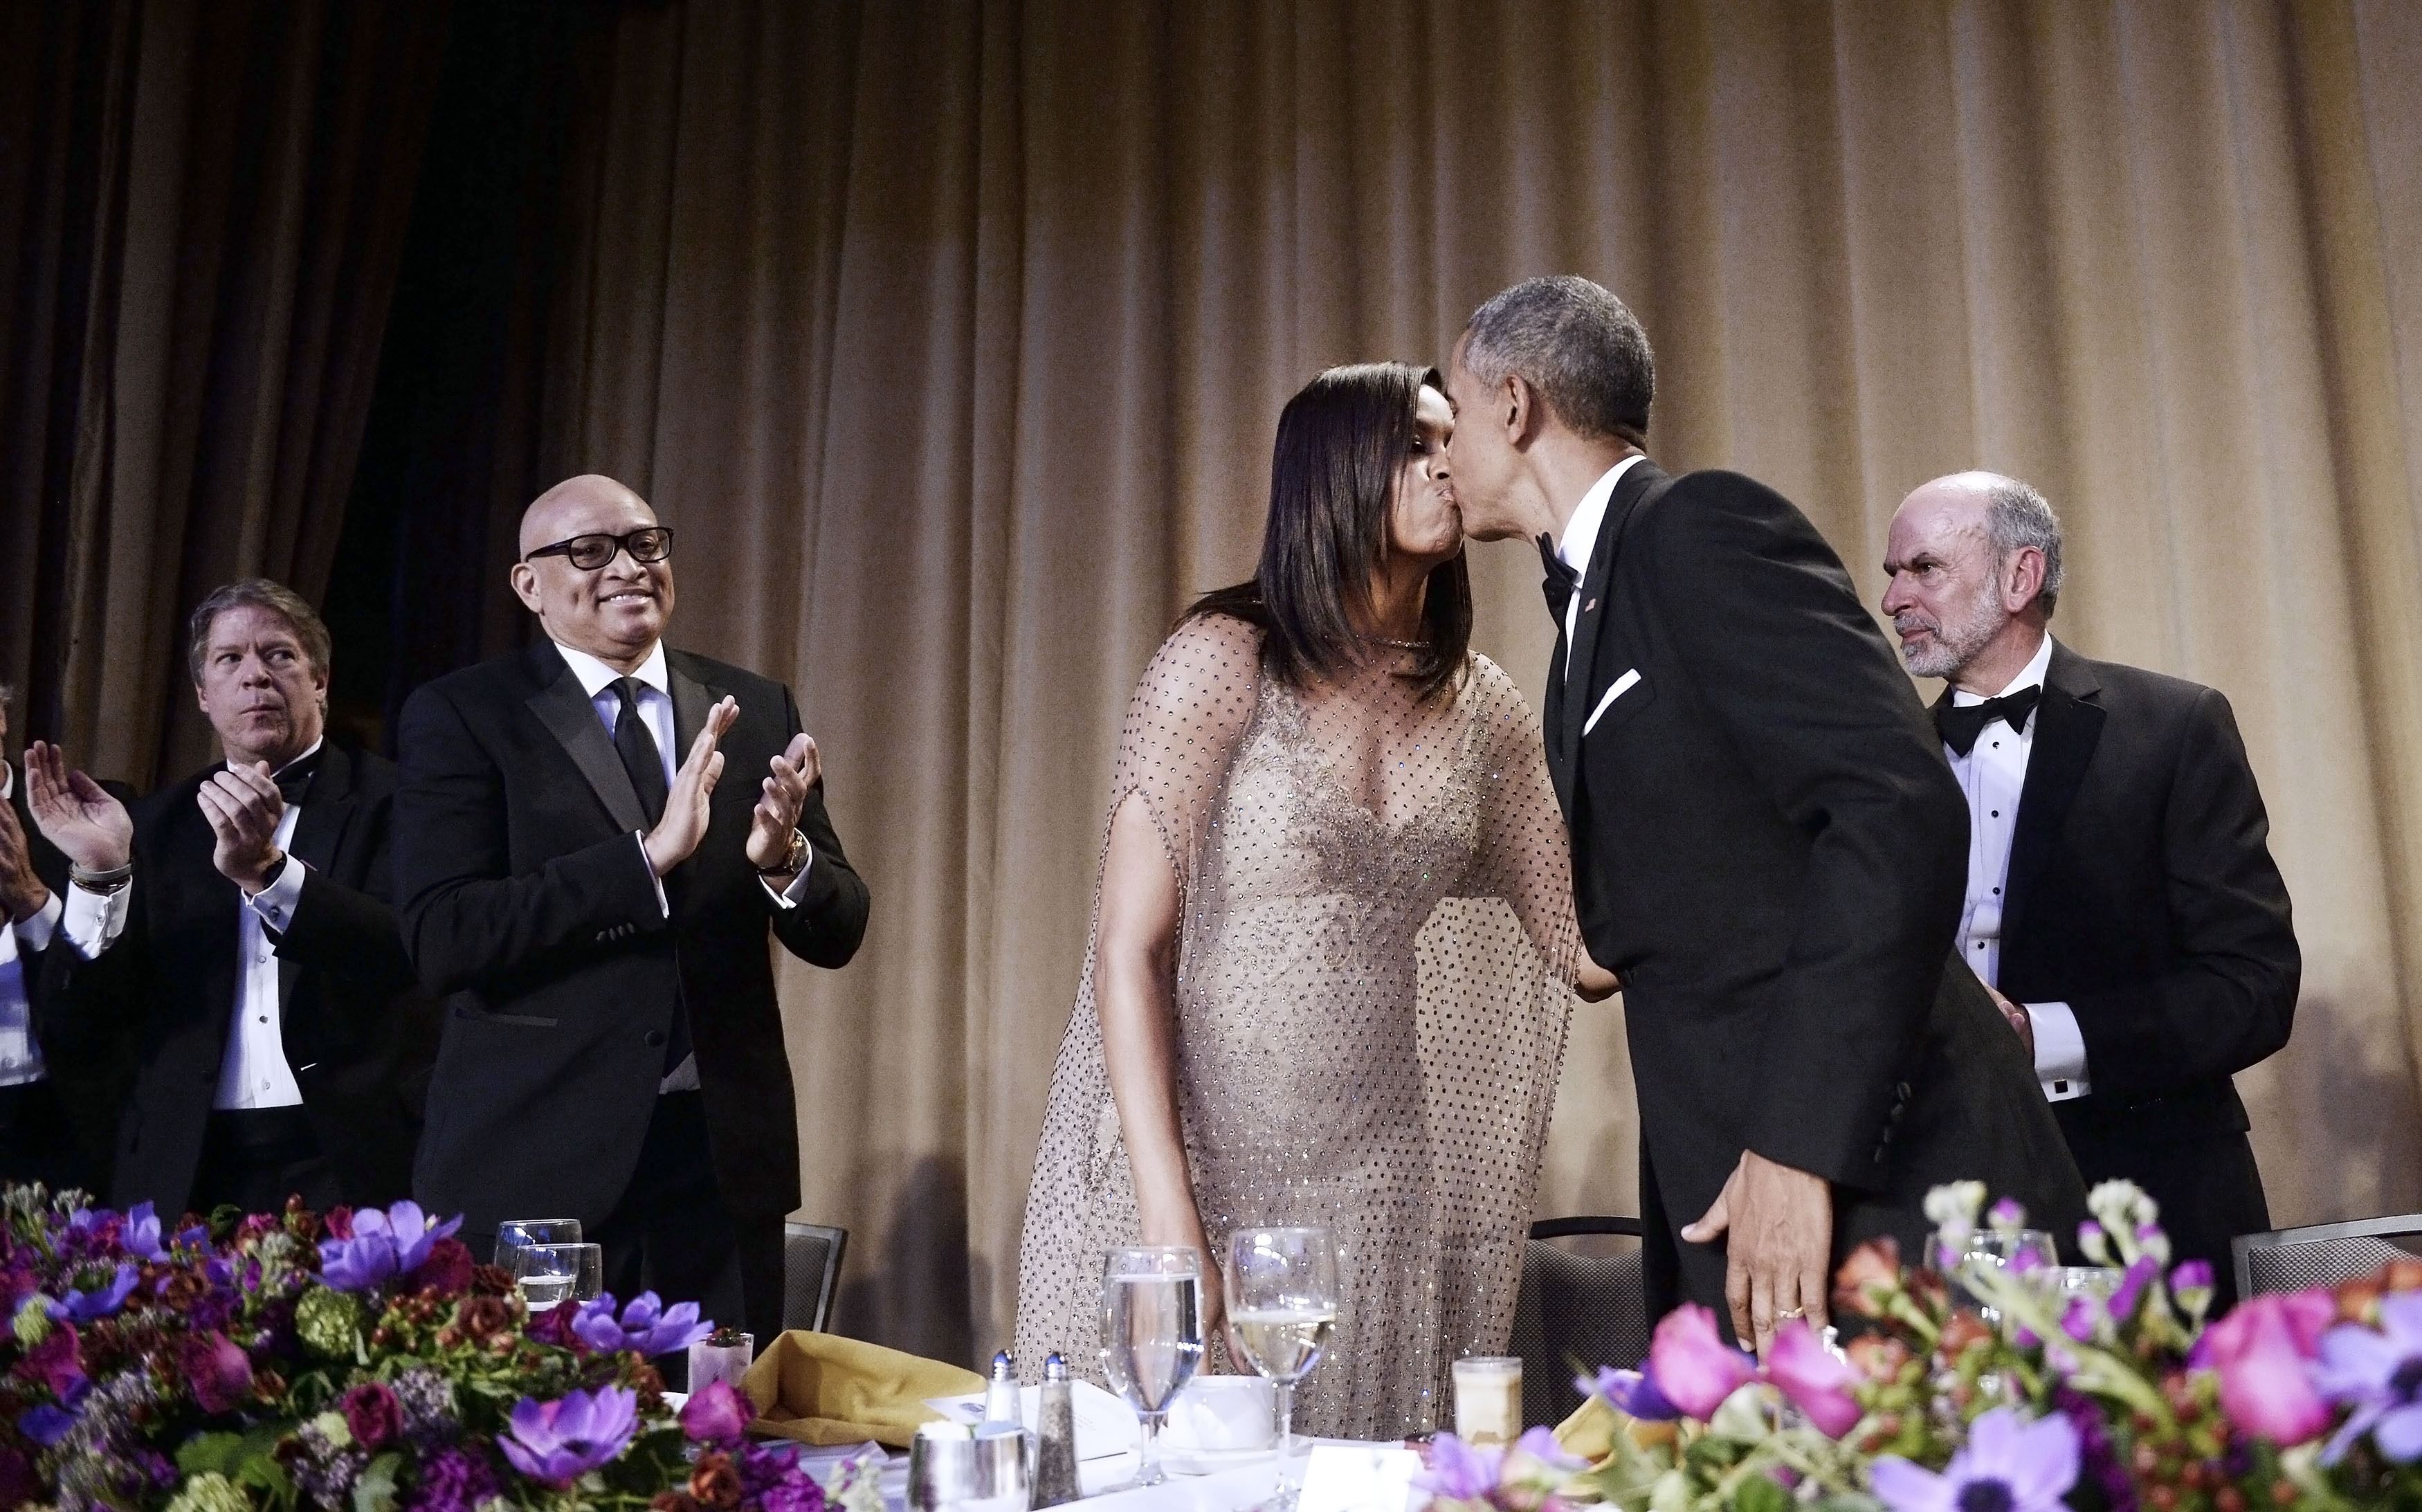 barack obama and michelle obama kissing